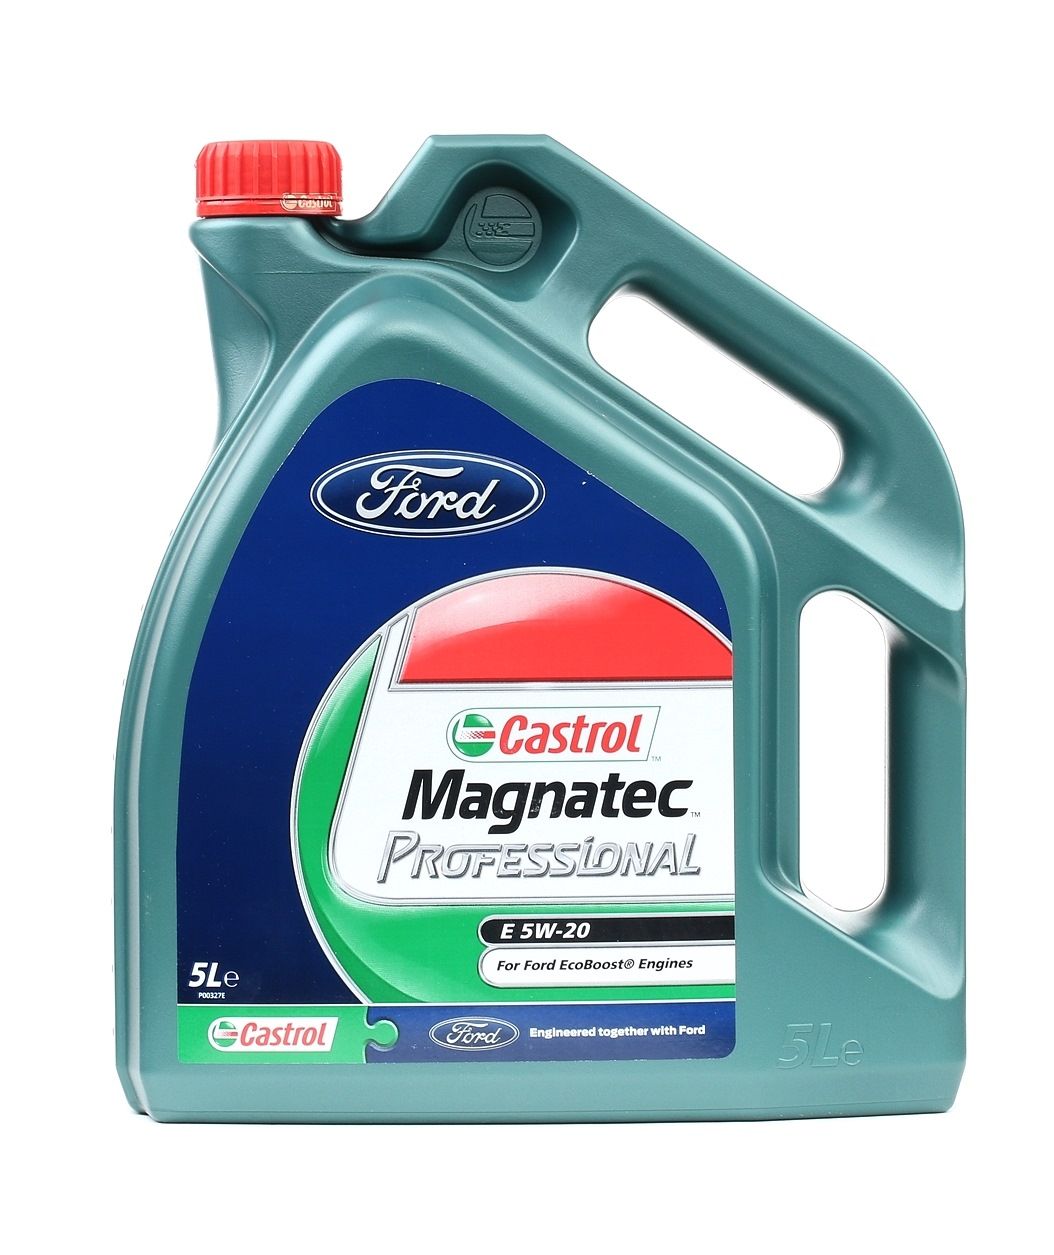 Kaufen Sie Auto Öl CASTROL 151A95 Magnatec Professional, Ford E 5W-20, 5l, Vollsynthetiköl